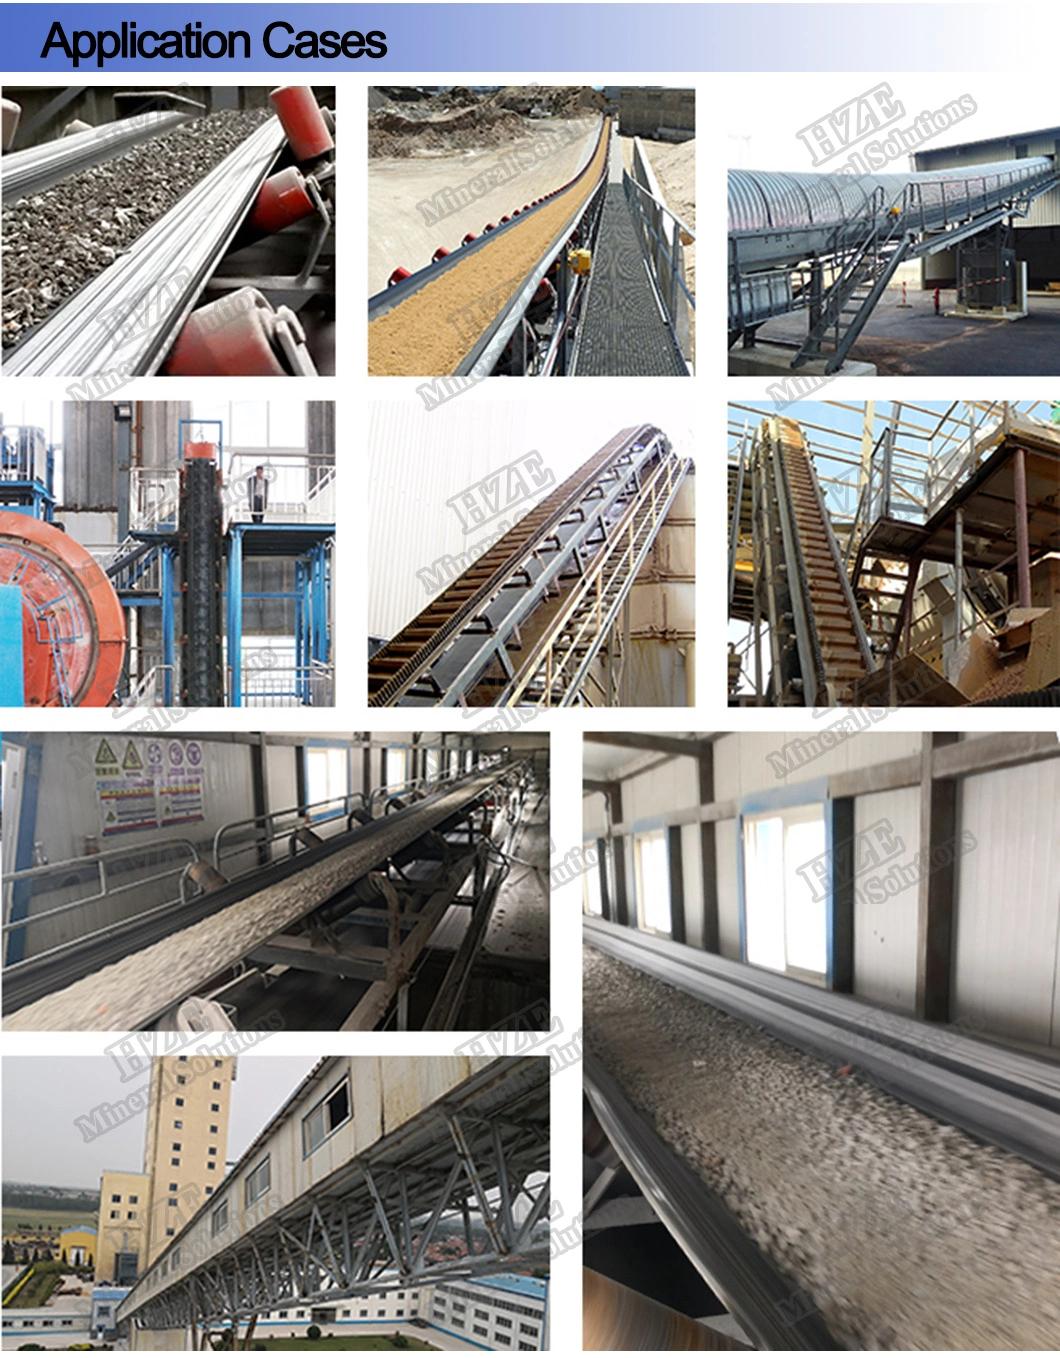 Mining Machine Corrugated Sidewall Belt Conveyor of Mineral Processing Plant